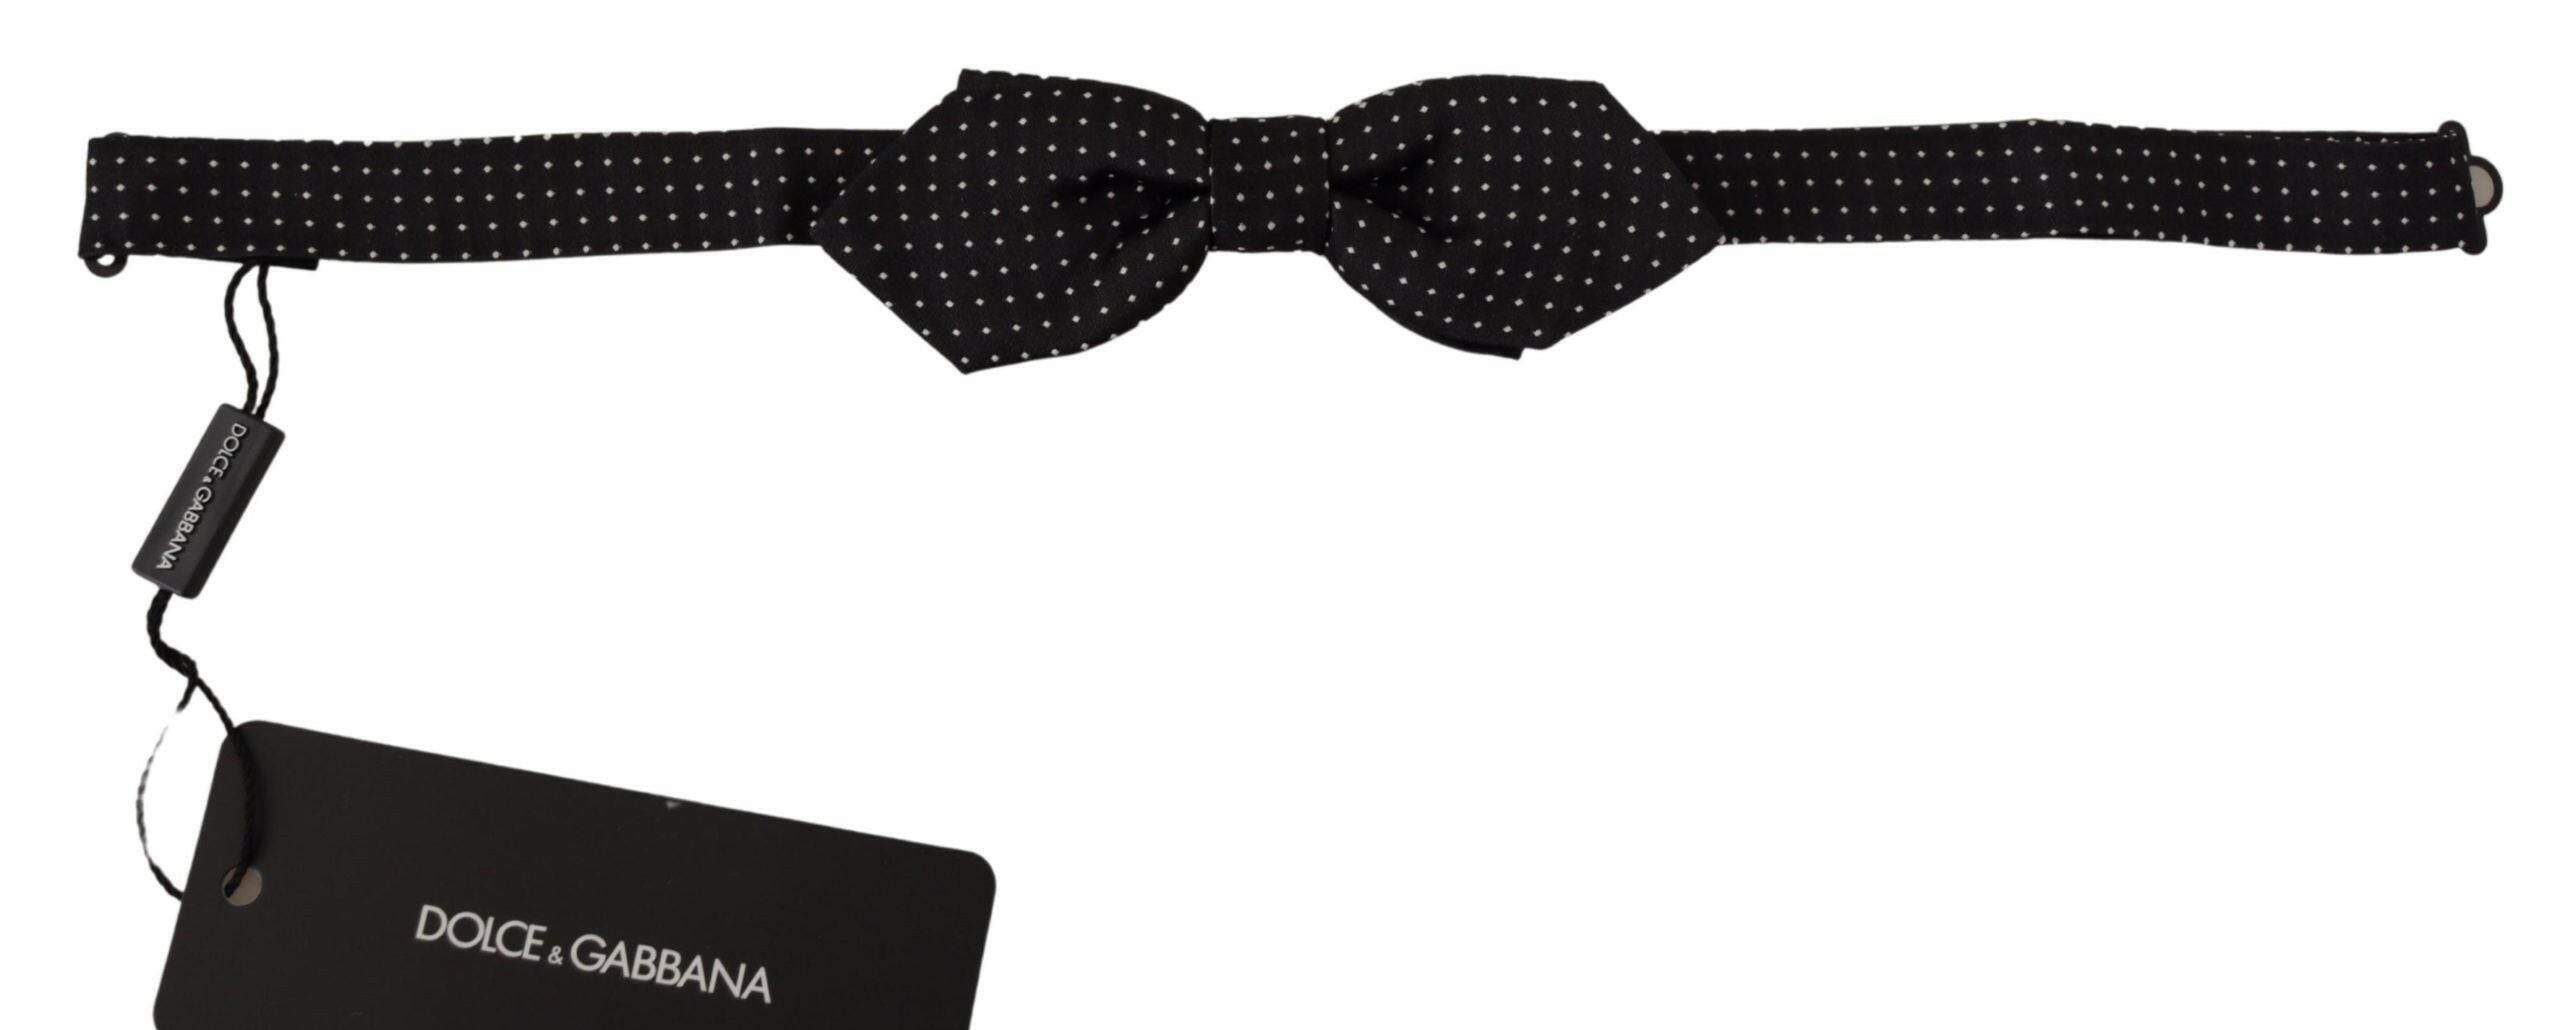 Dolce & Gabbana Black White Polka Dot Adjustable Neck Papillon Bow Tie - GENUINE AUTHENTIC BRAND LLC  